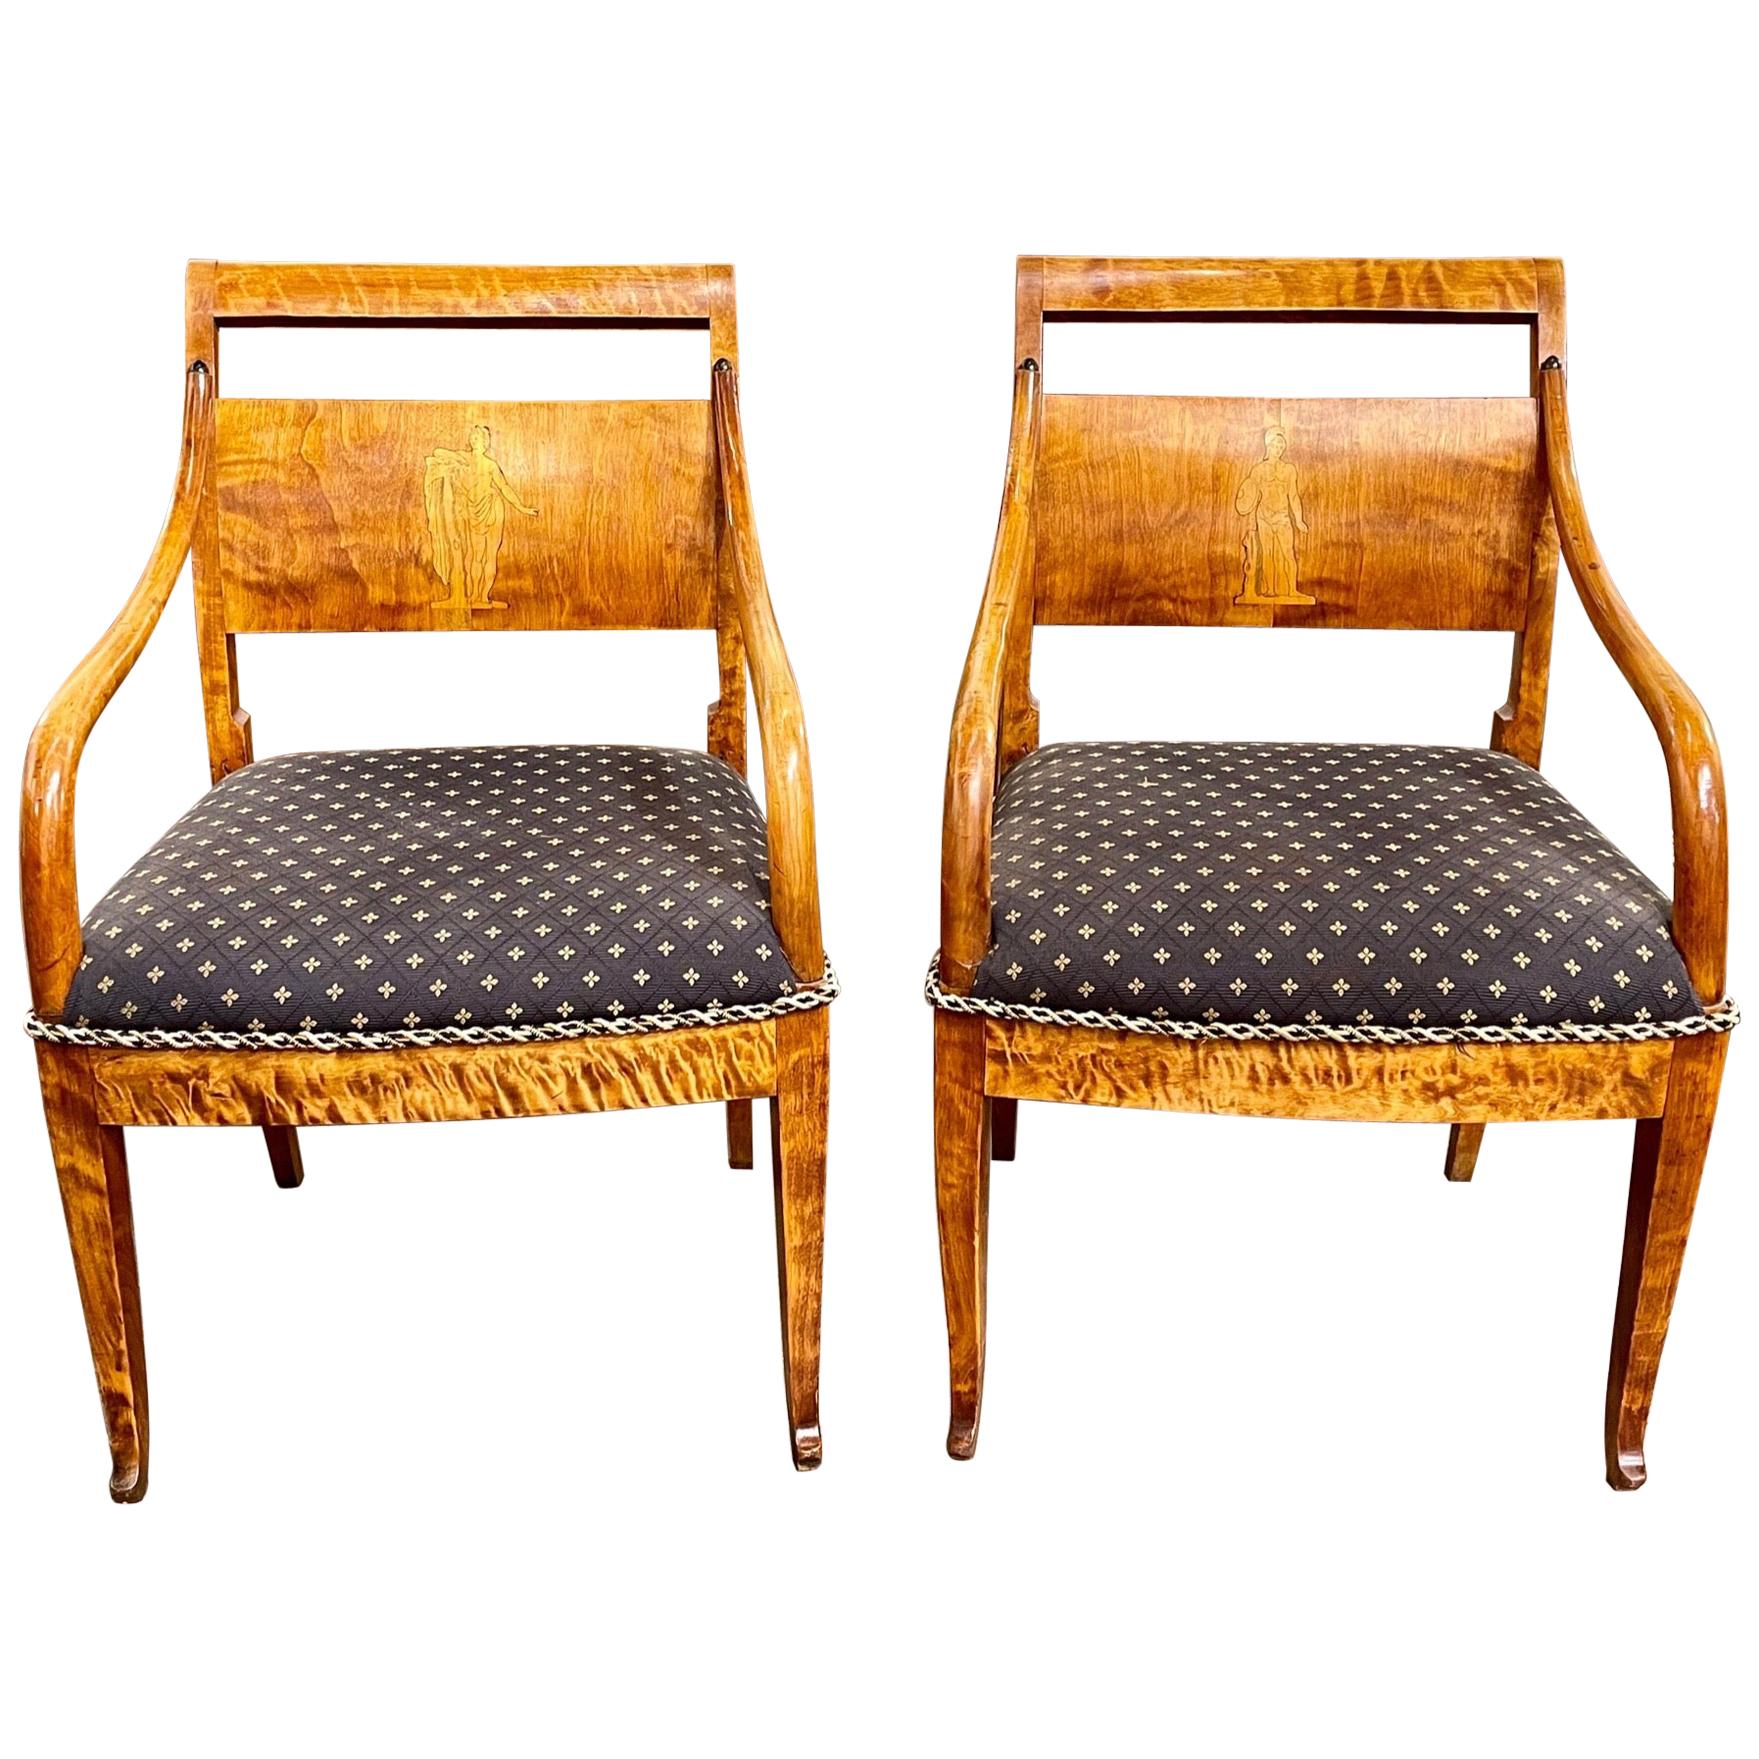 Pair of Antique Biedermeier Inlaid Armchairs